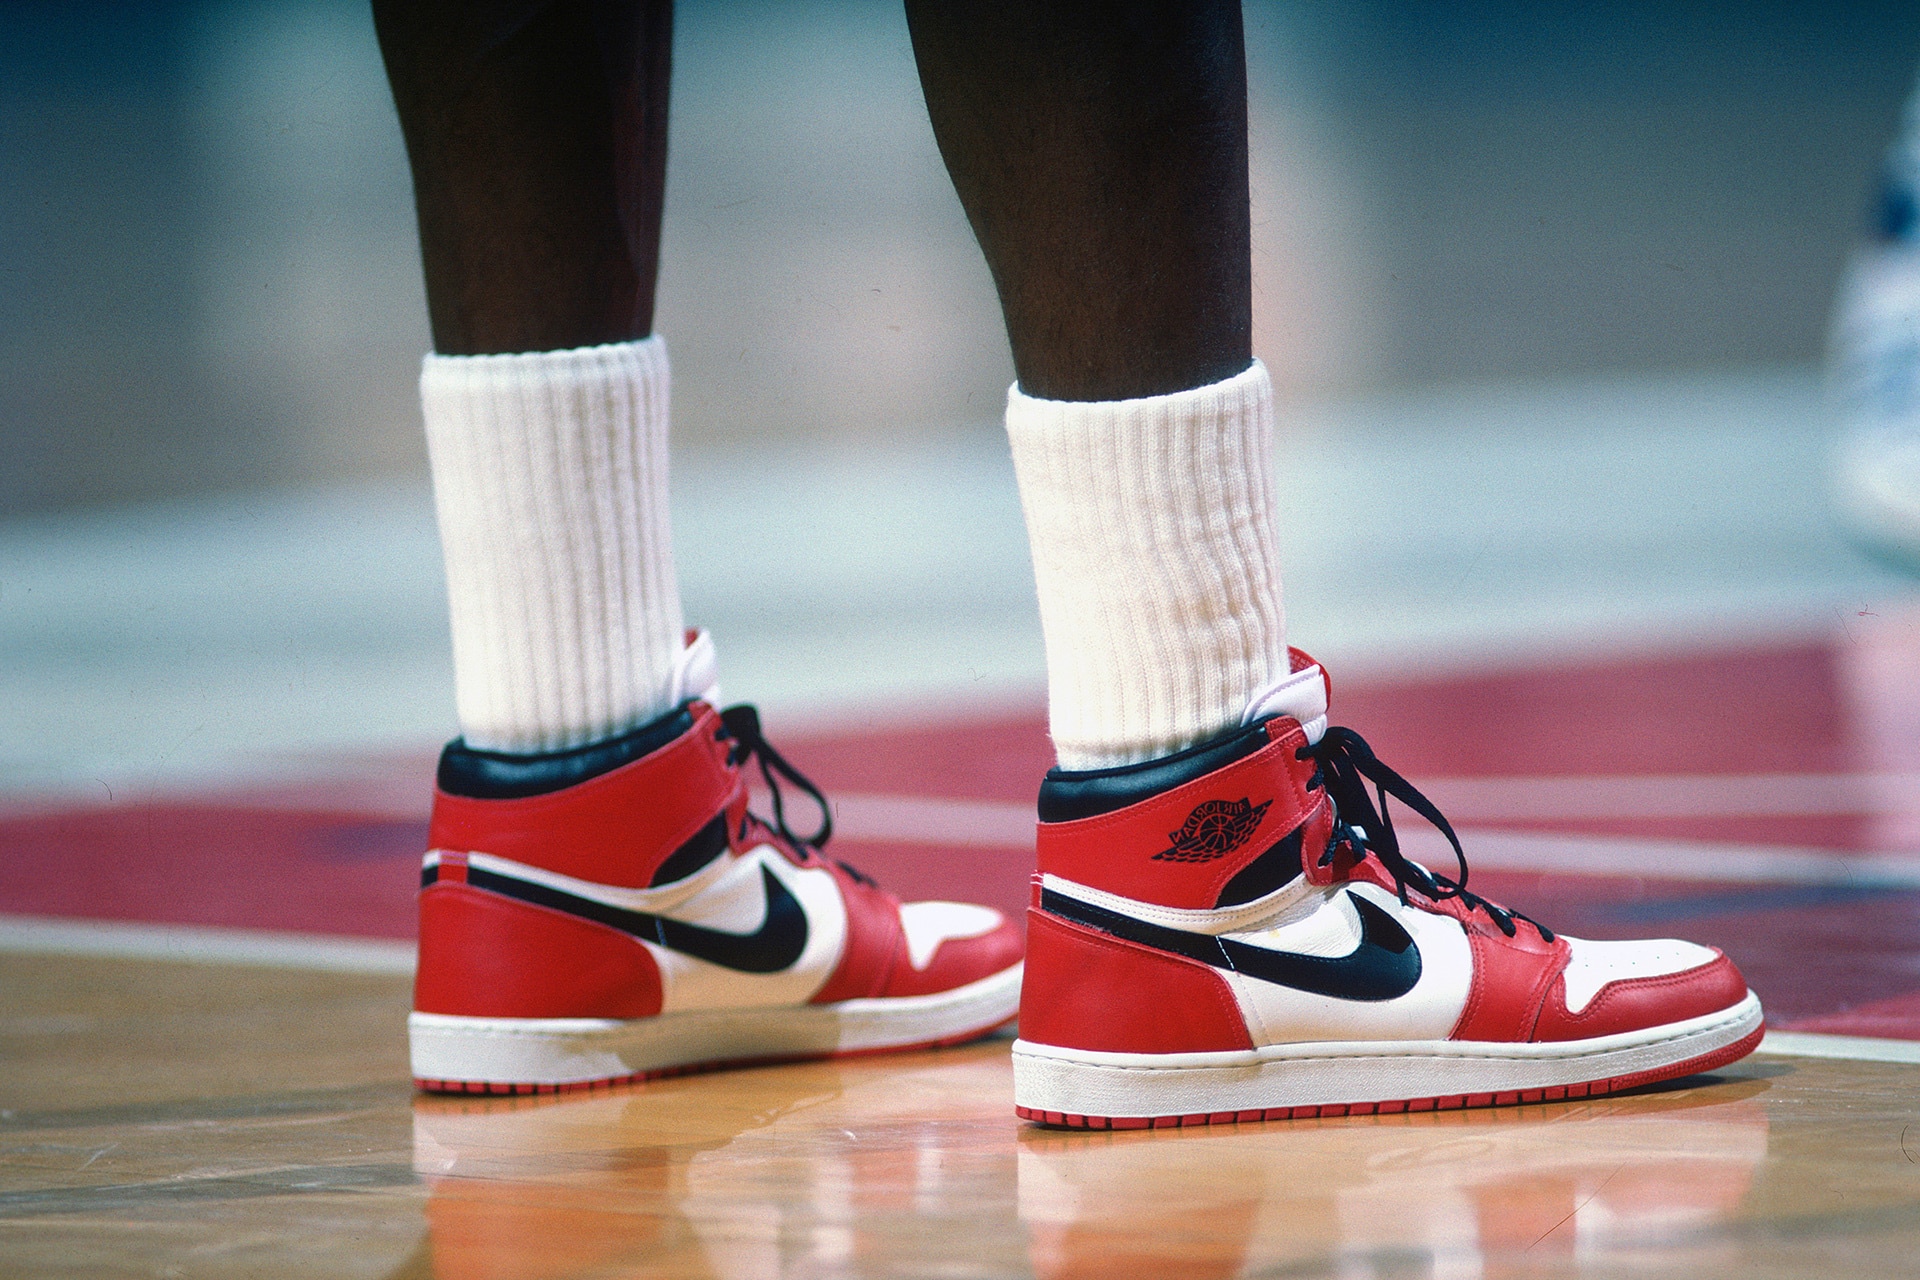 Michael Jordan's 1984 Olympic Gold sneakers set new world record